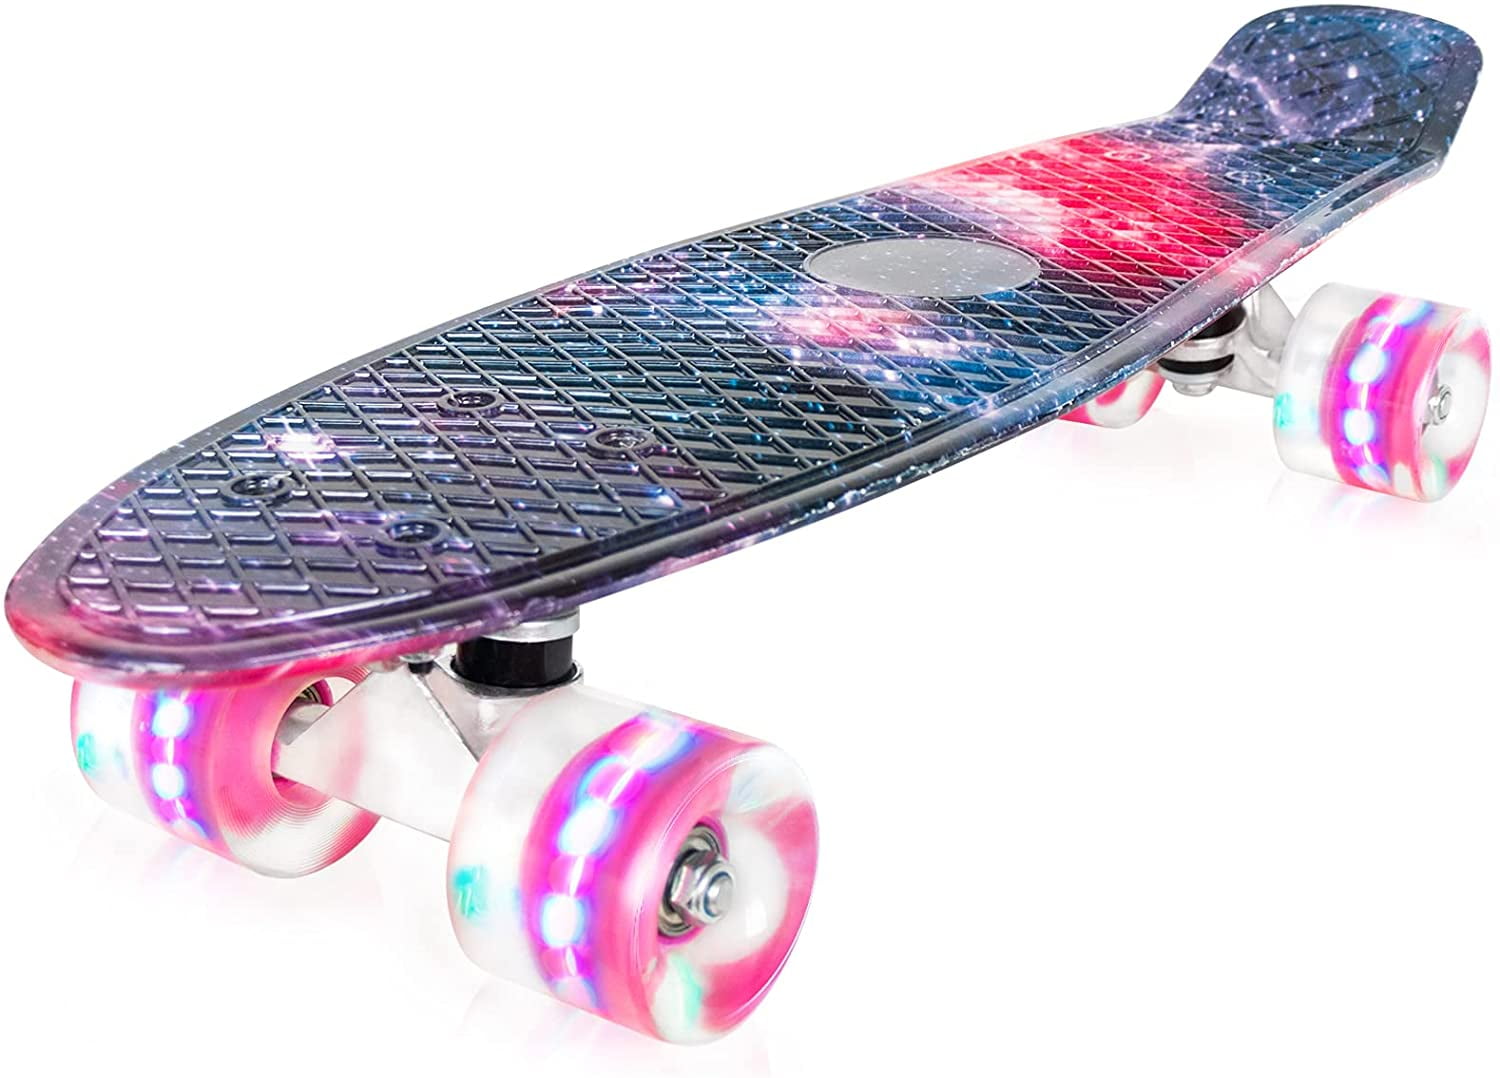 Nattork Skateboards Complete 22 Inch Mini Cruiser Retro Skateboard with Colorful Light Up Wheels for Kids Girls Boys Beginners 